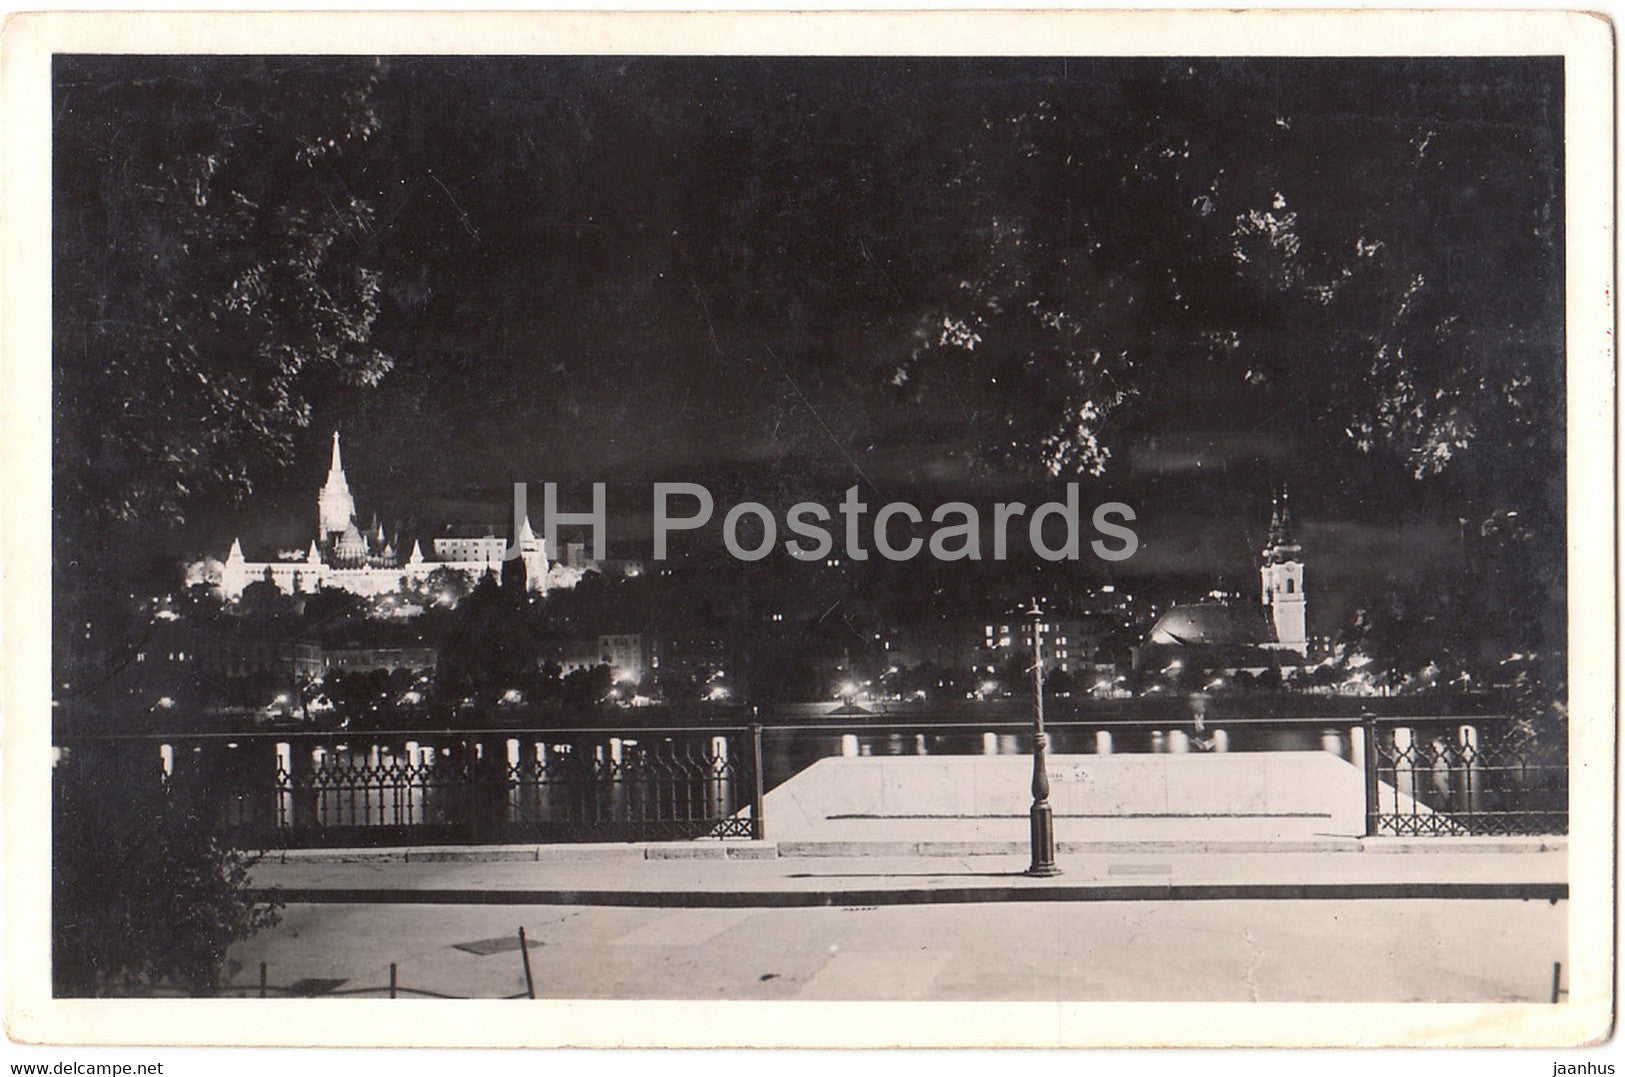 Budapest - A kivilagitott Halaszbastya - The Fishers Bastion illuminated - old postcard - Hungary - unused - JH Postcards